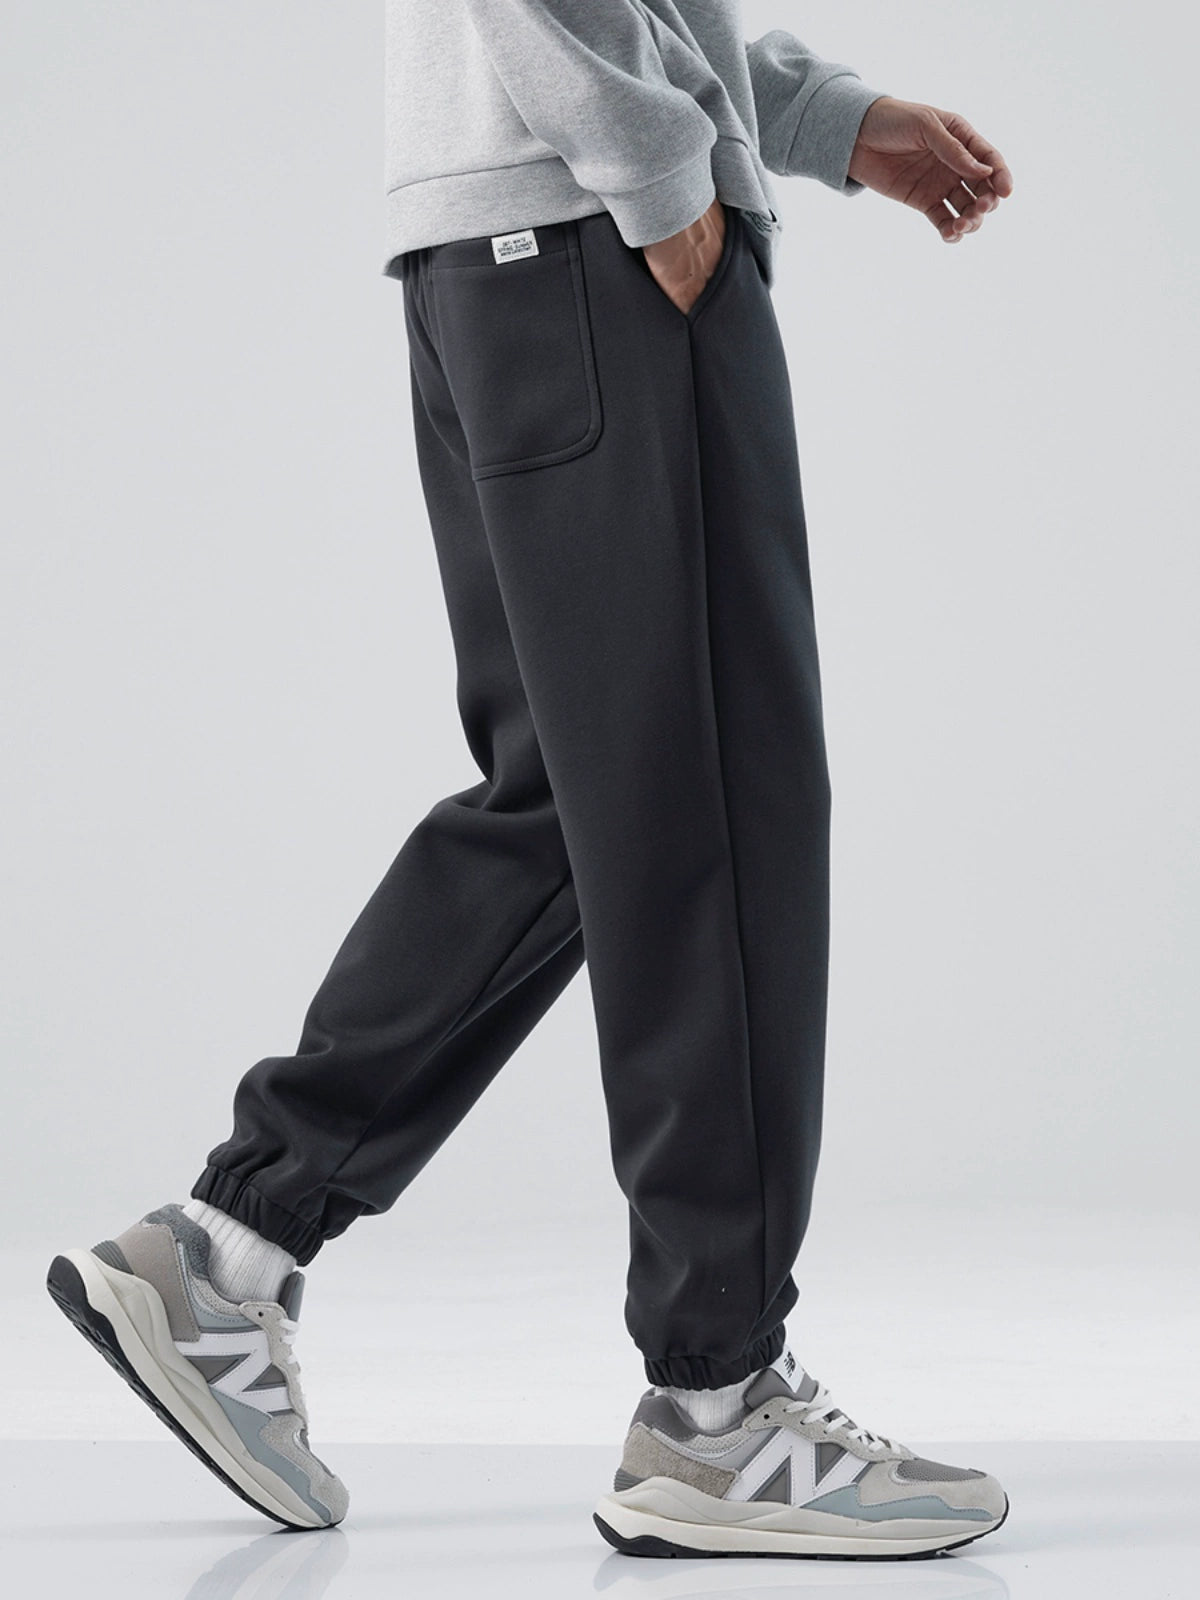 Hansca Sweatpants: Cozy Autumn Style for Teens